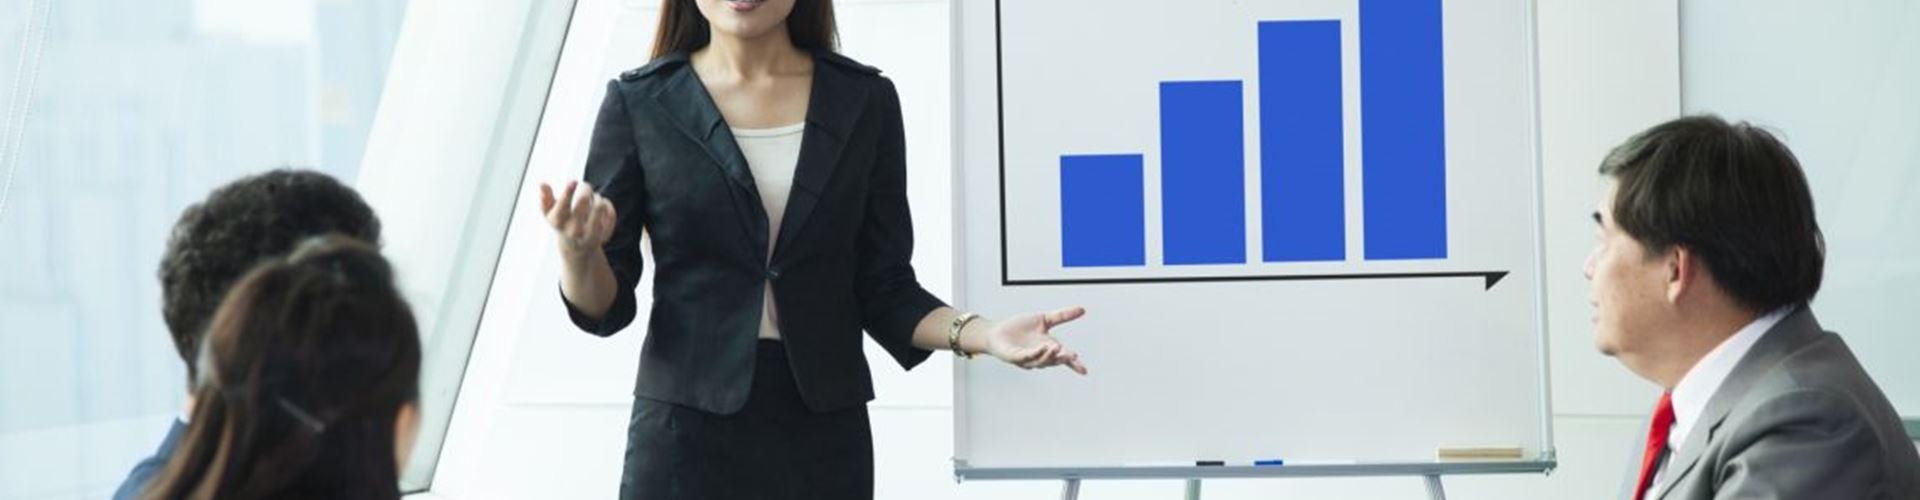 UK improves female representation on company boards